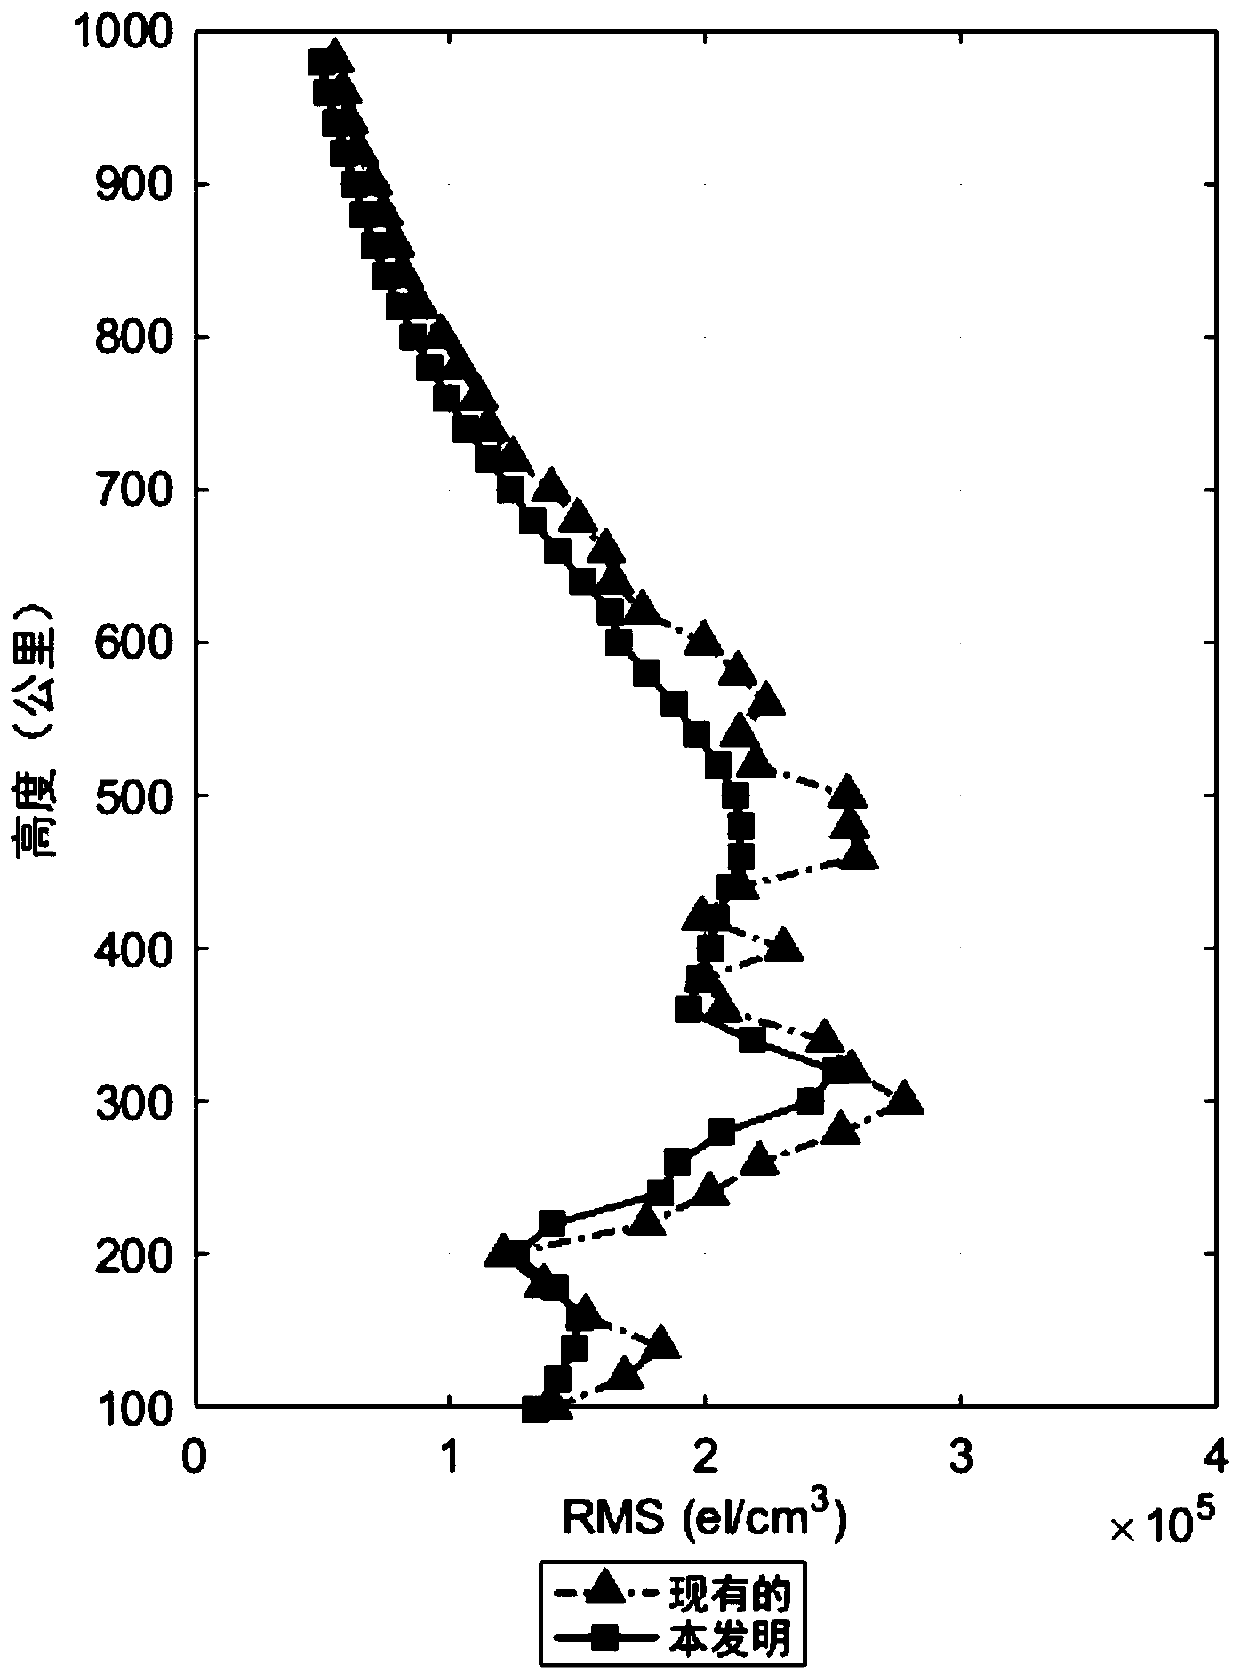 A Numerical Integration Parameterized Ionospheric Chromatography Method